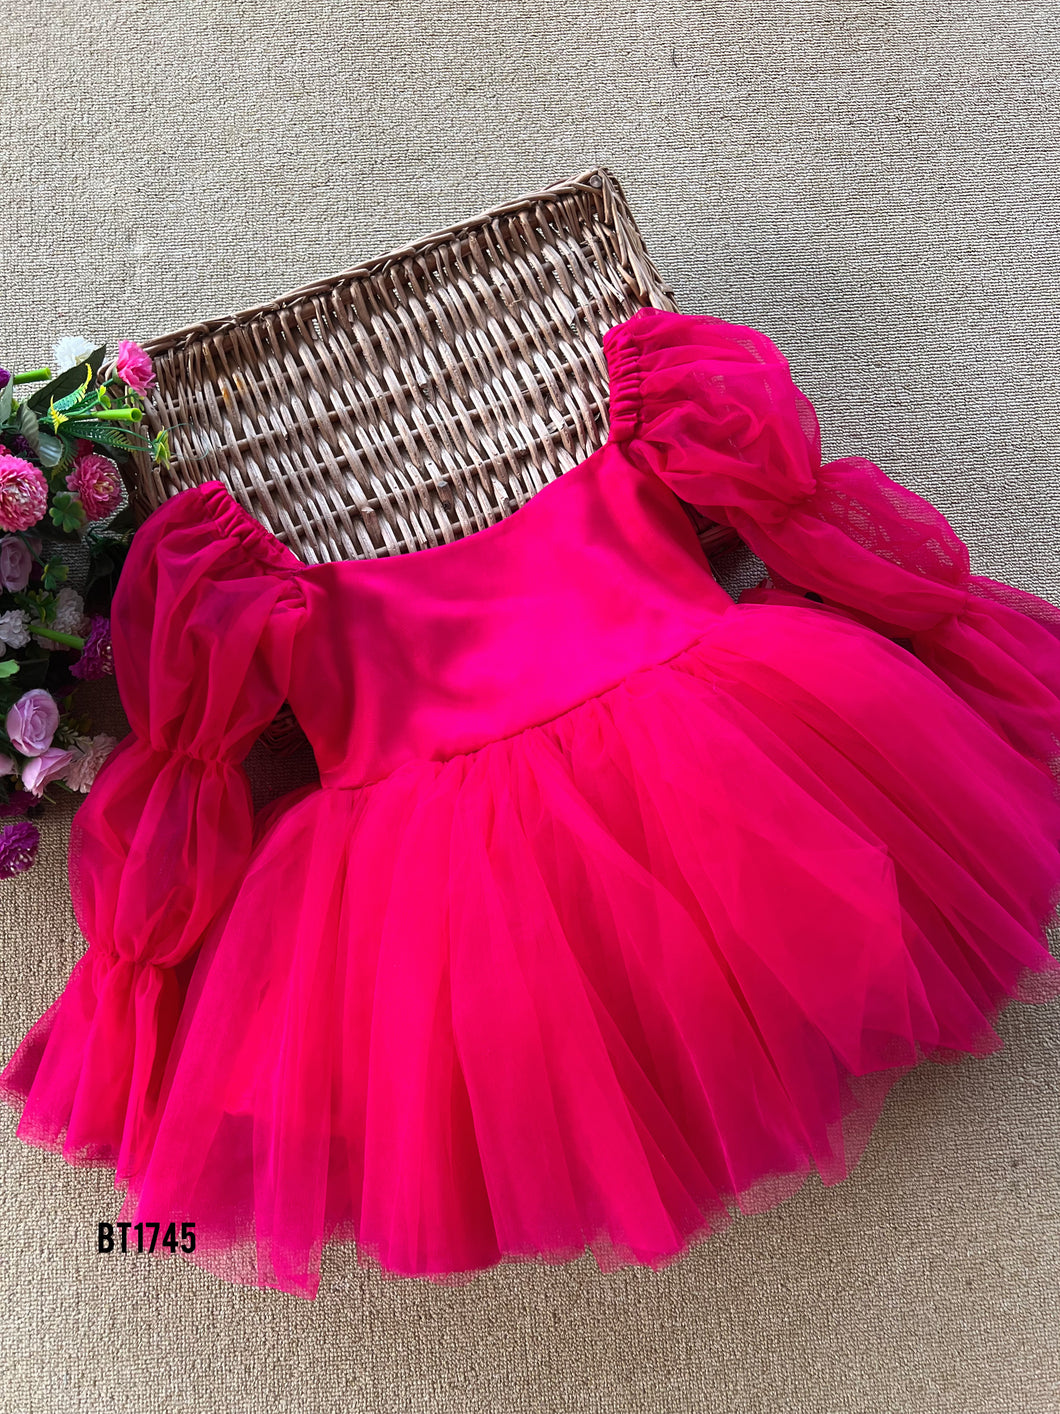 BT1745 Radiant Fuchsia Fantasy Dress - A Vivid Celebration for Your Little Star